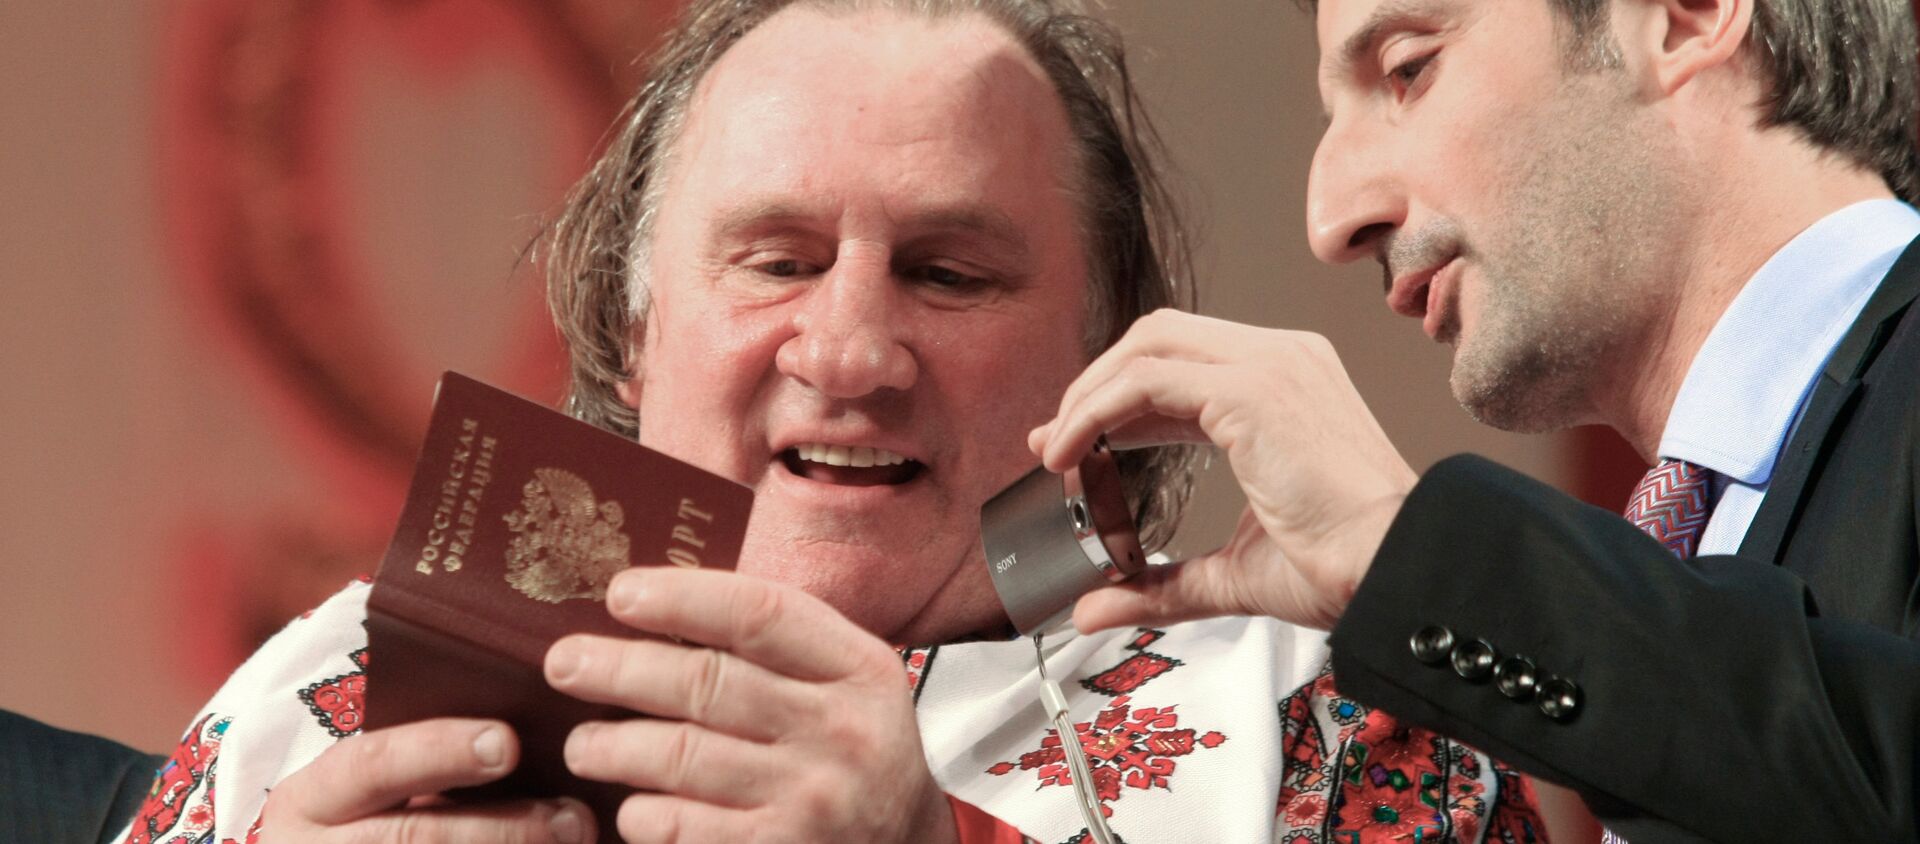 Gérard Depardieu con el pasaporte ruso - Sputnik Mundo, 1920, 10.01.2017